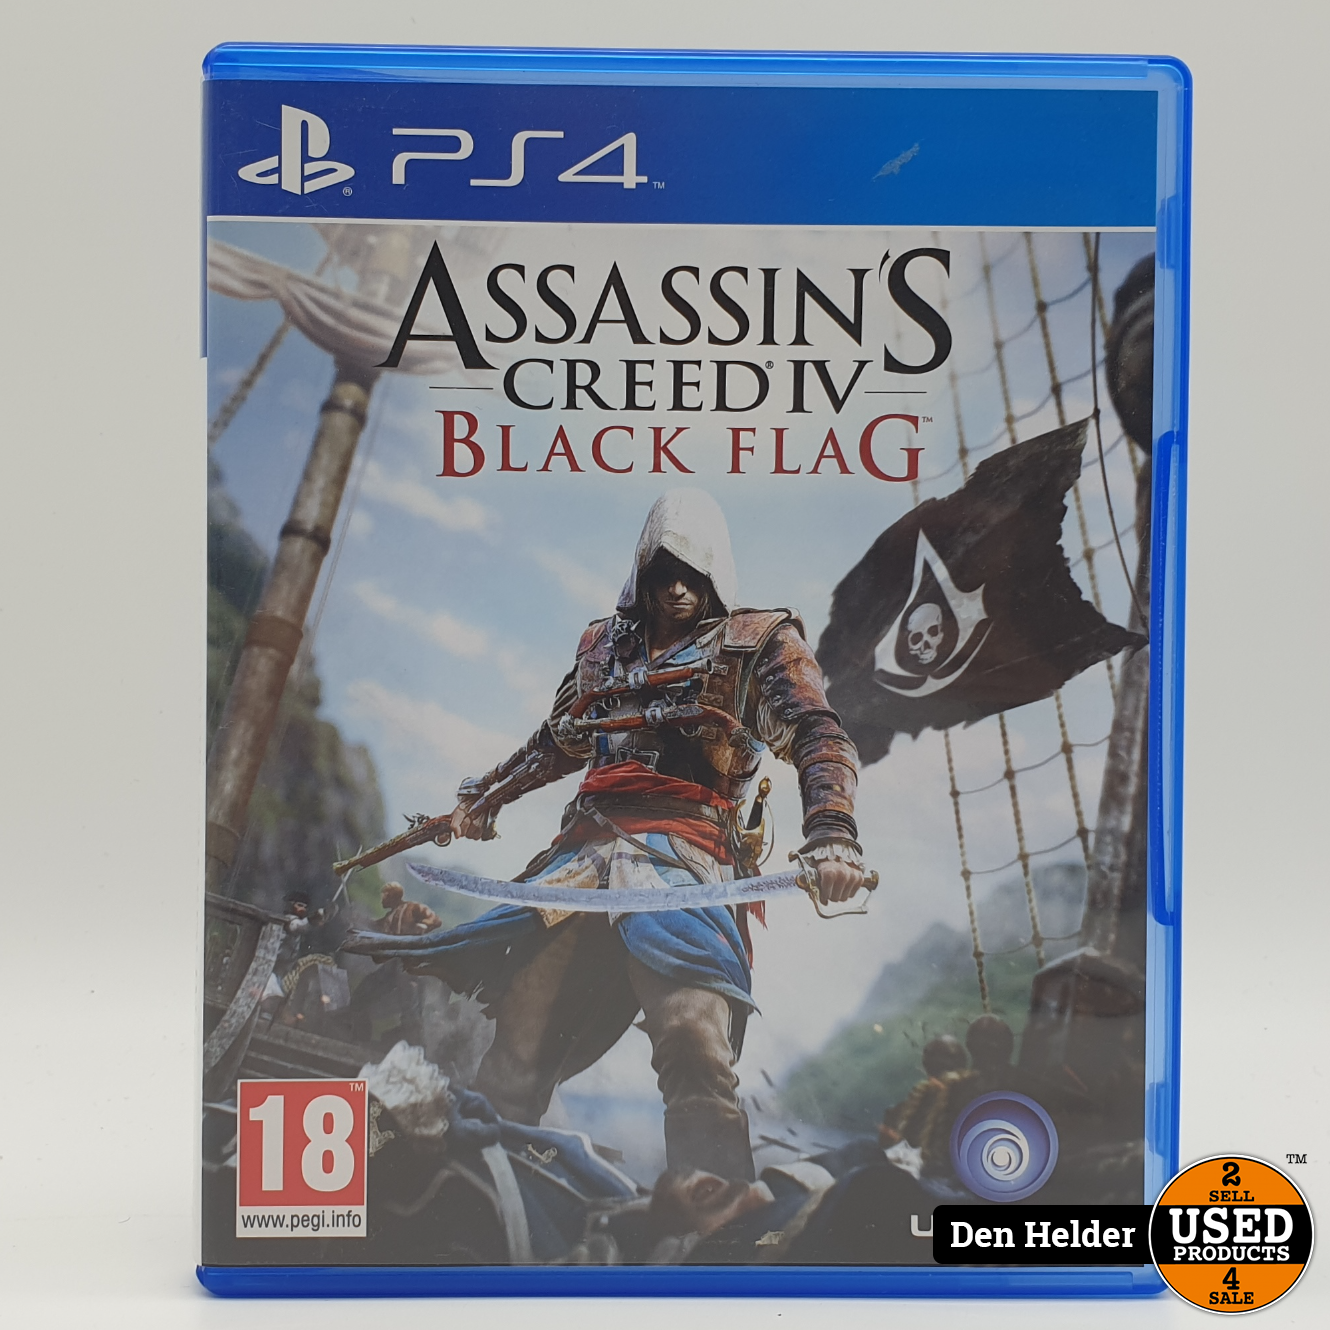 Assassins Creed IV: Black Flag PS4 Game - In Nette Staat - Used Den Helder